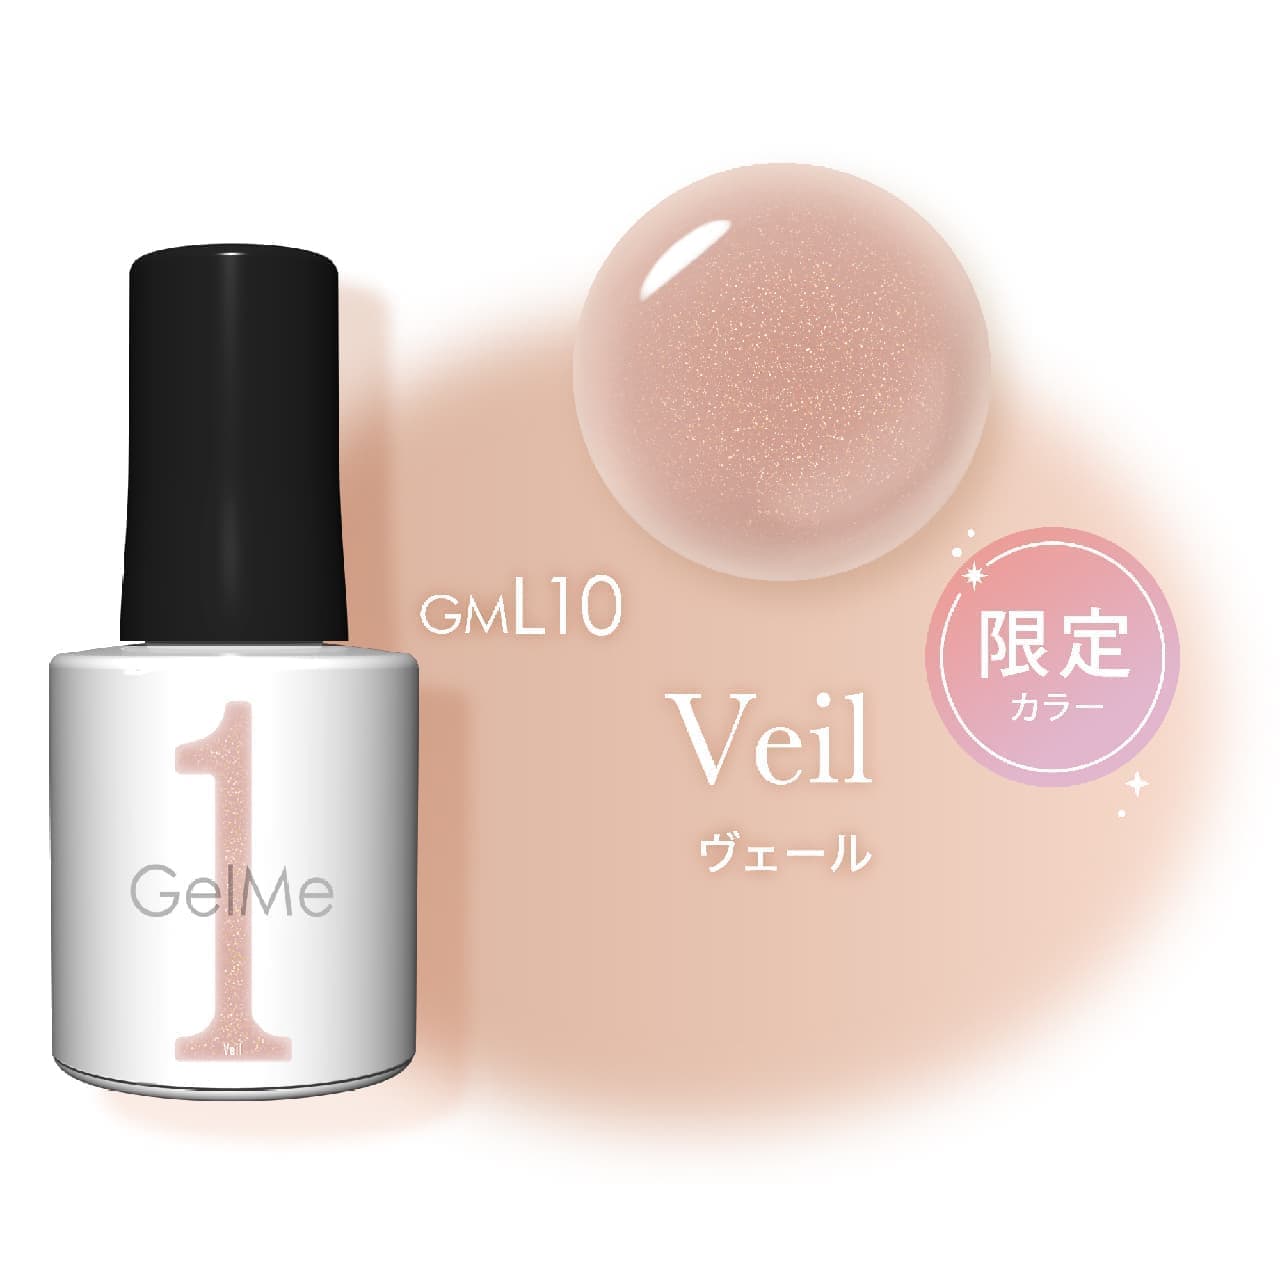 GelmyOne "GML10 Veil / Veil